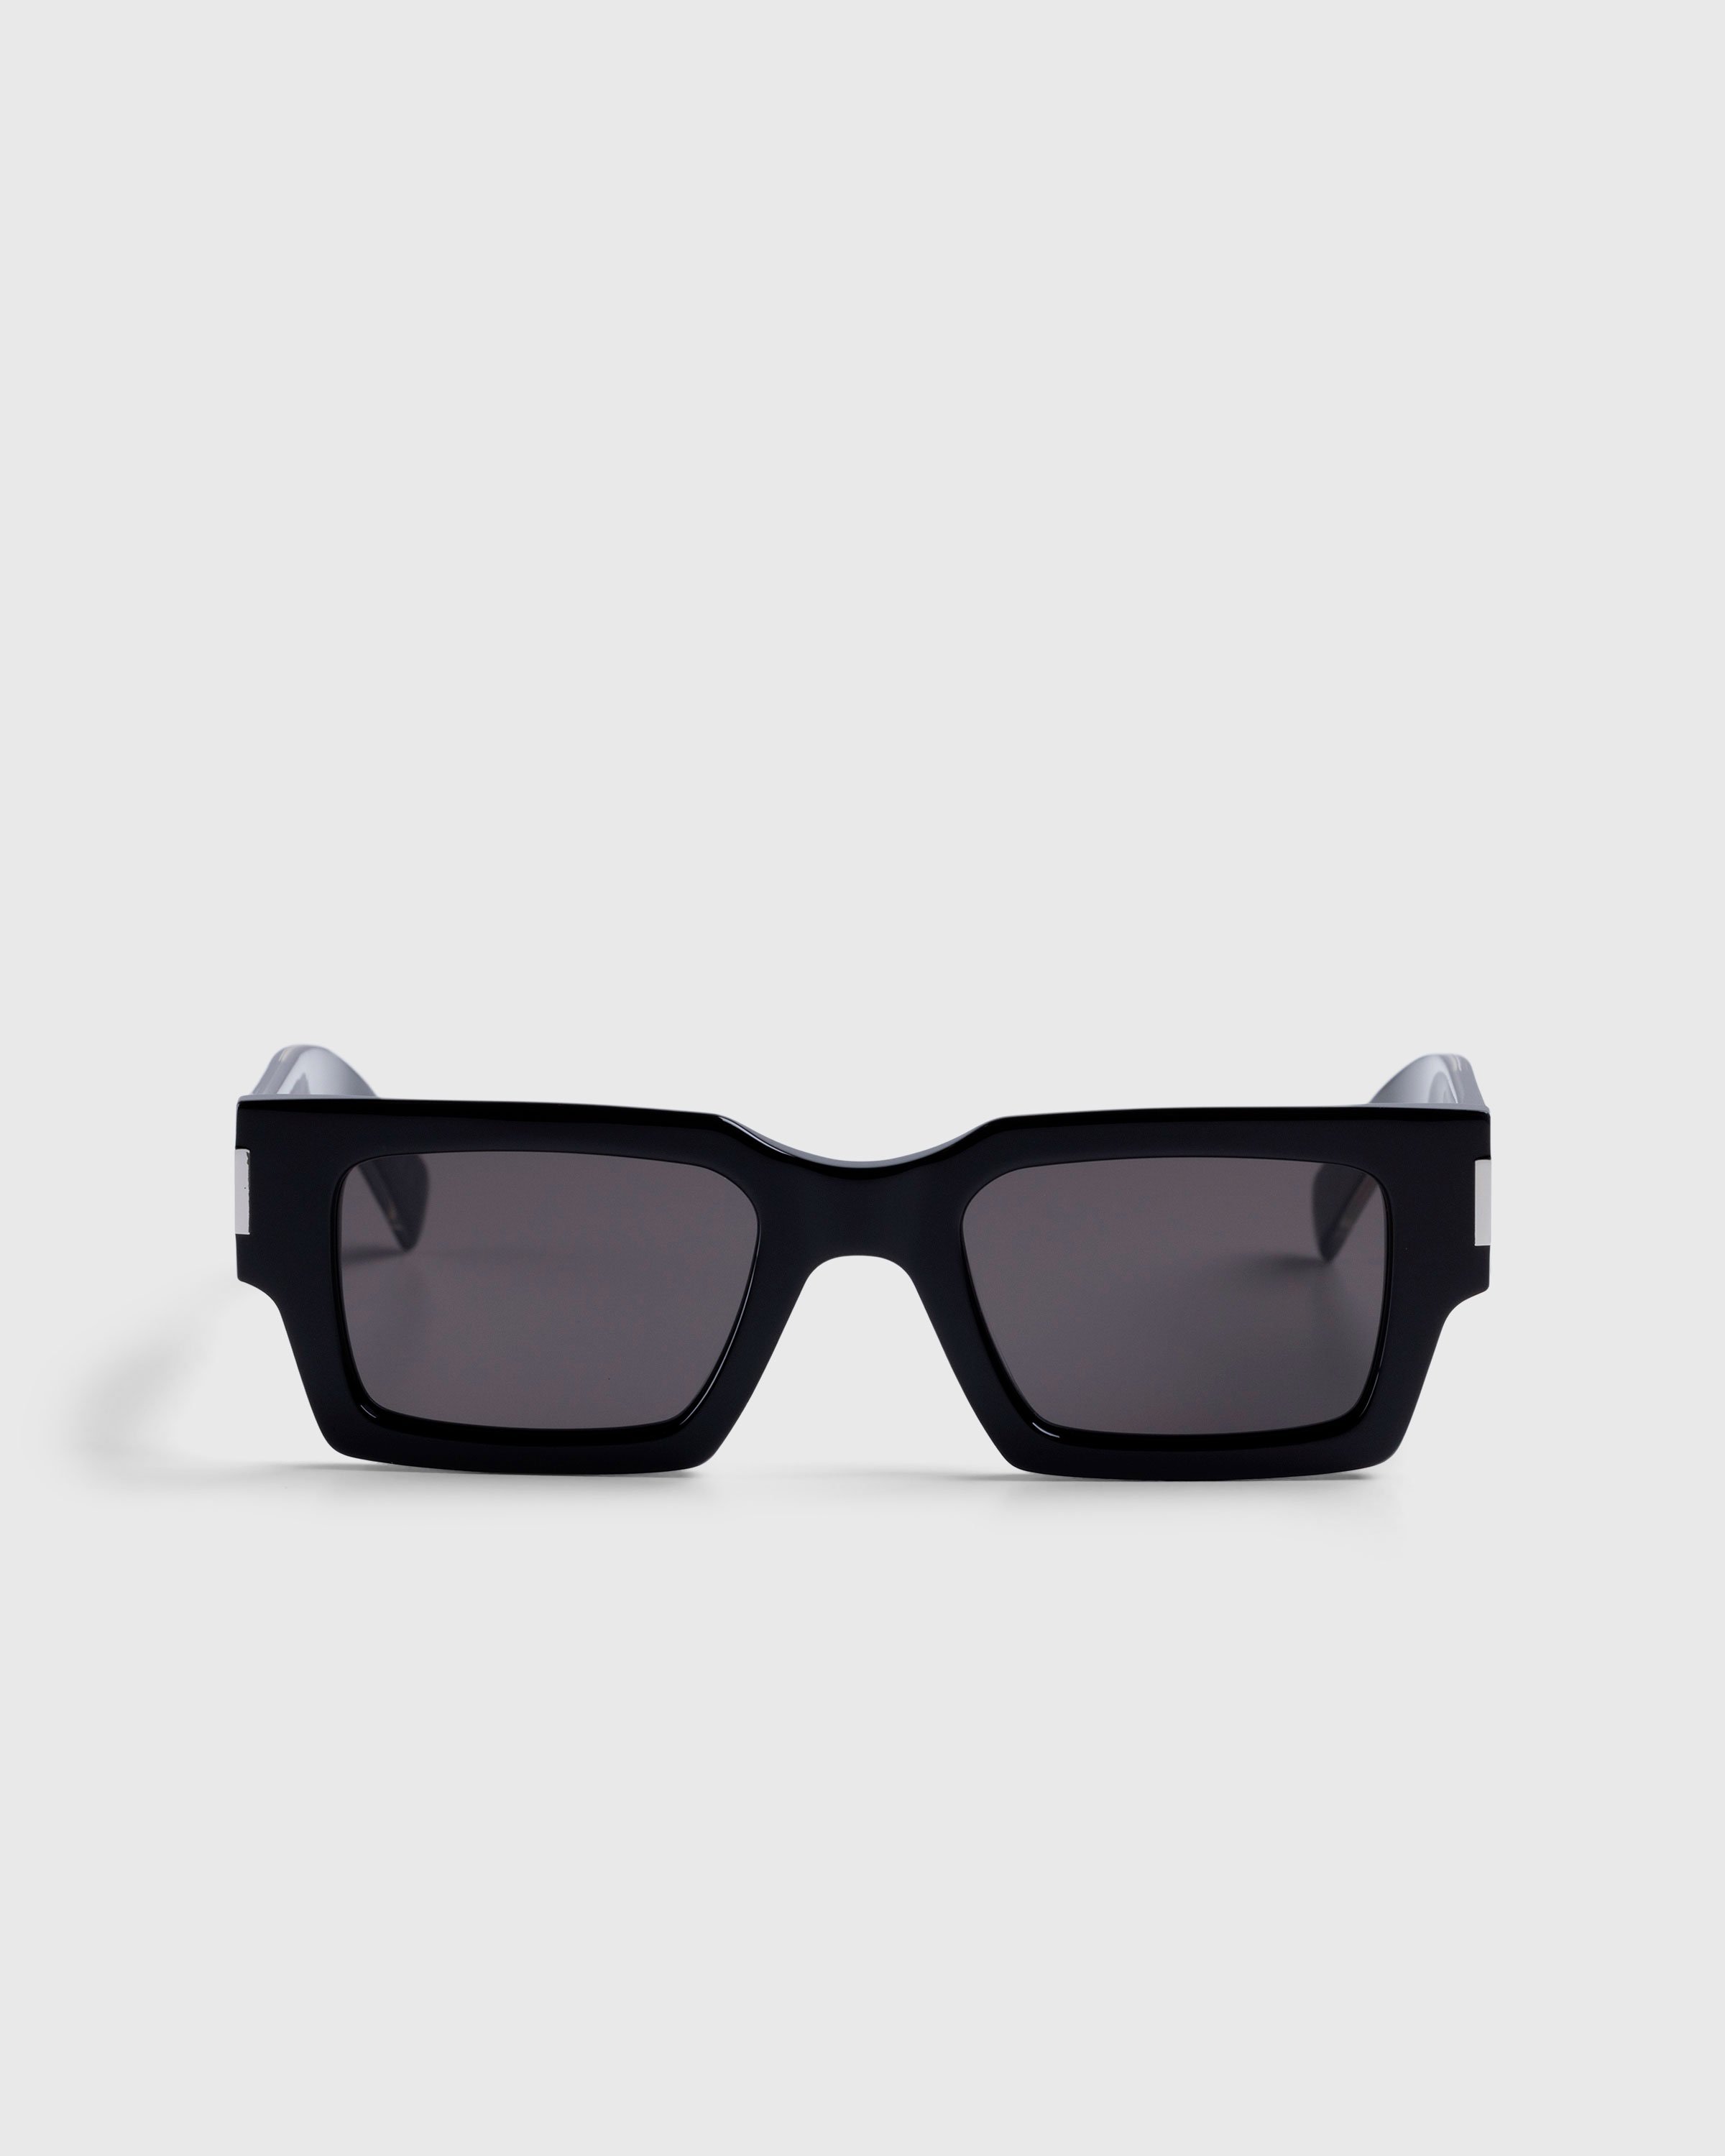 Saint Laurent - SL 572 Square Frame Sunglasses Black/Crystal - Accessories - Multi - Image 1